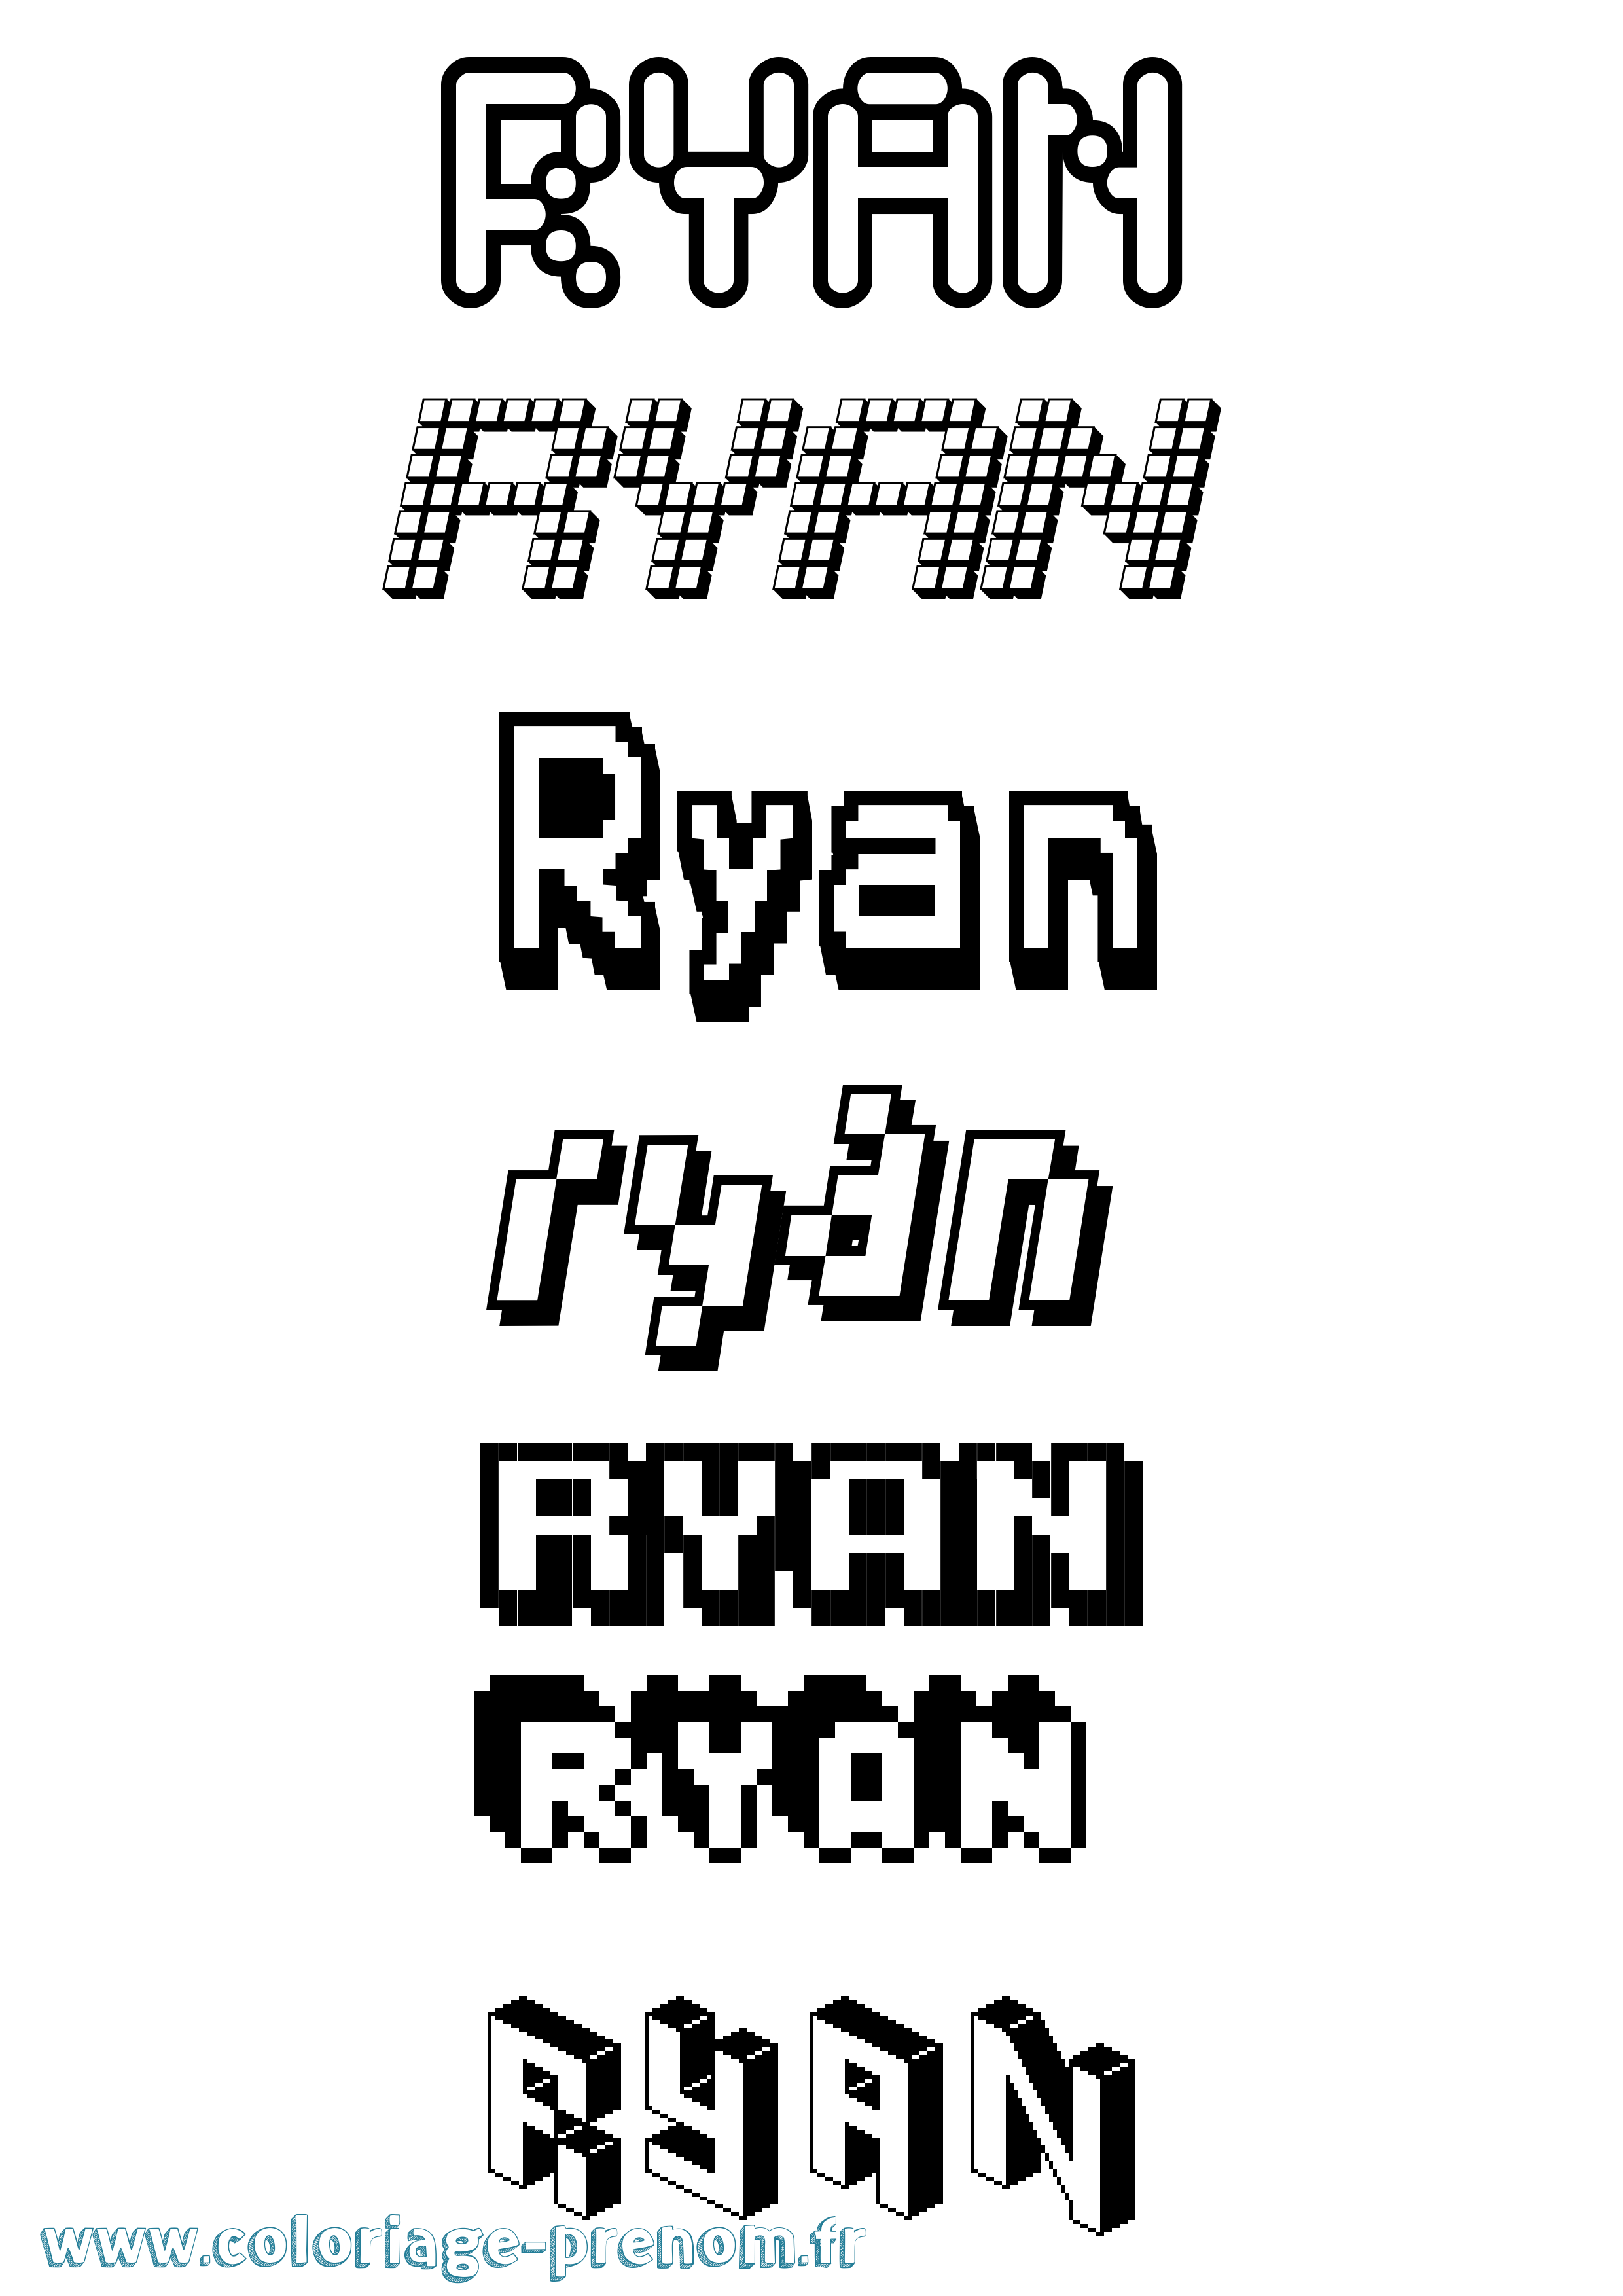 Coloriage prénom Ryan Pixel